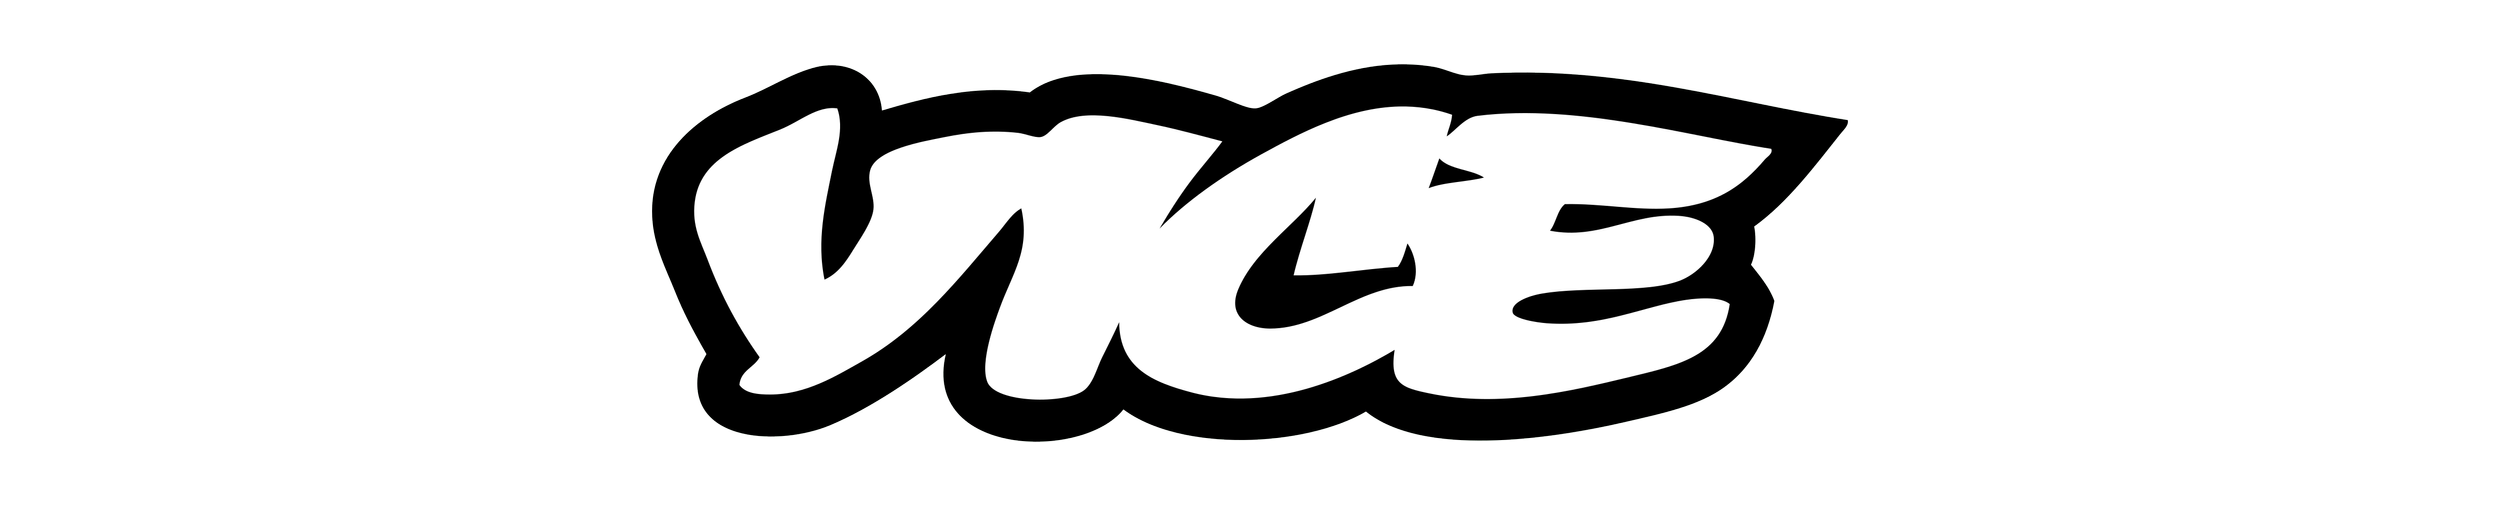 Vice_Media-Logo.wine.png